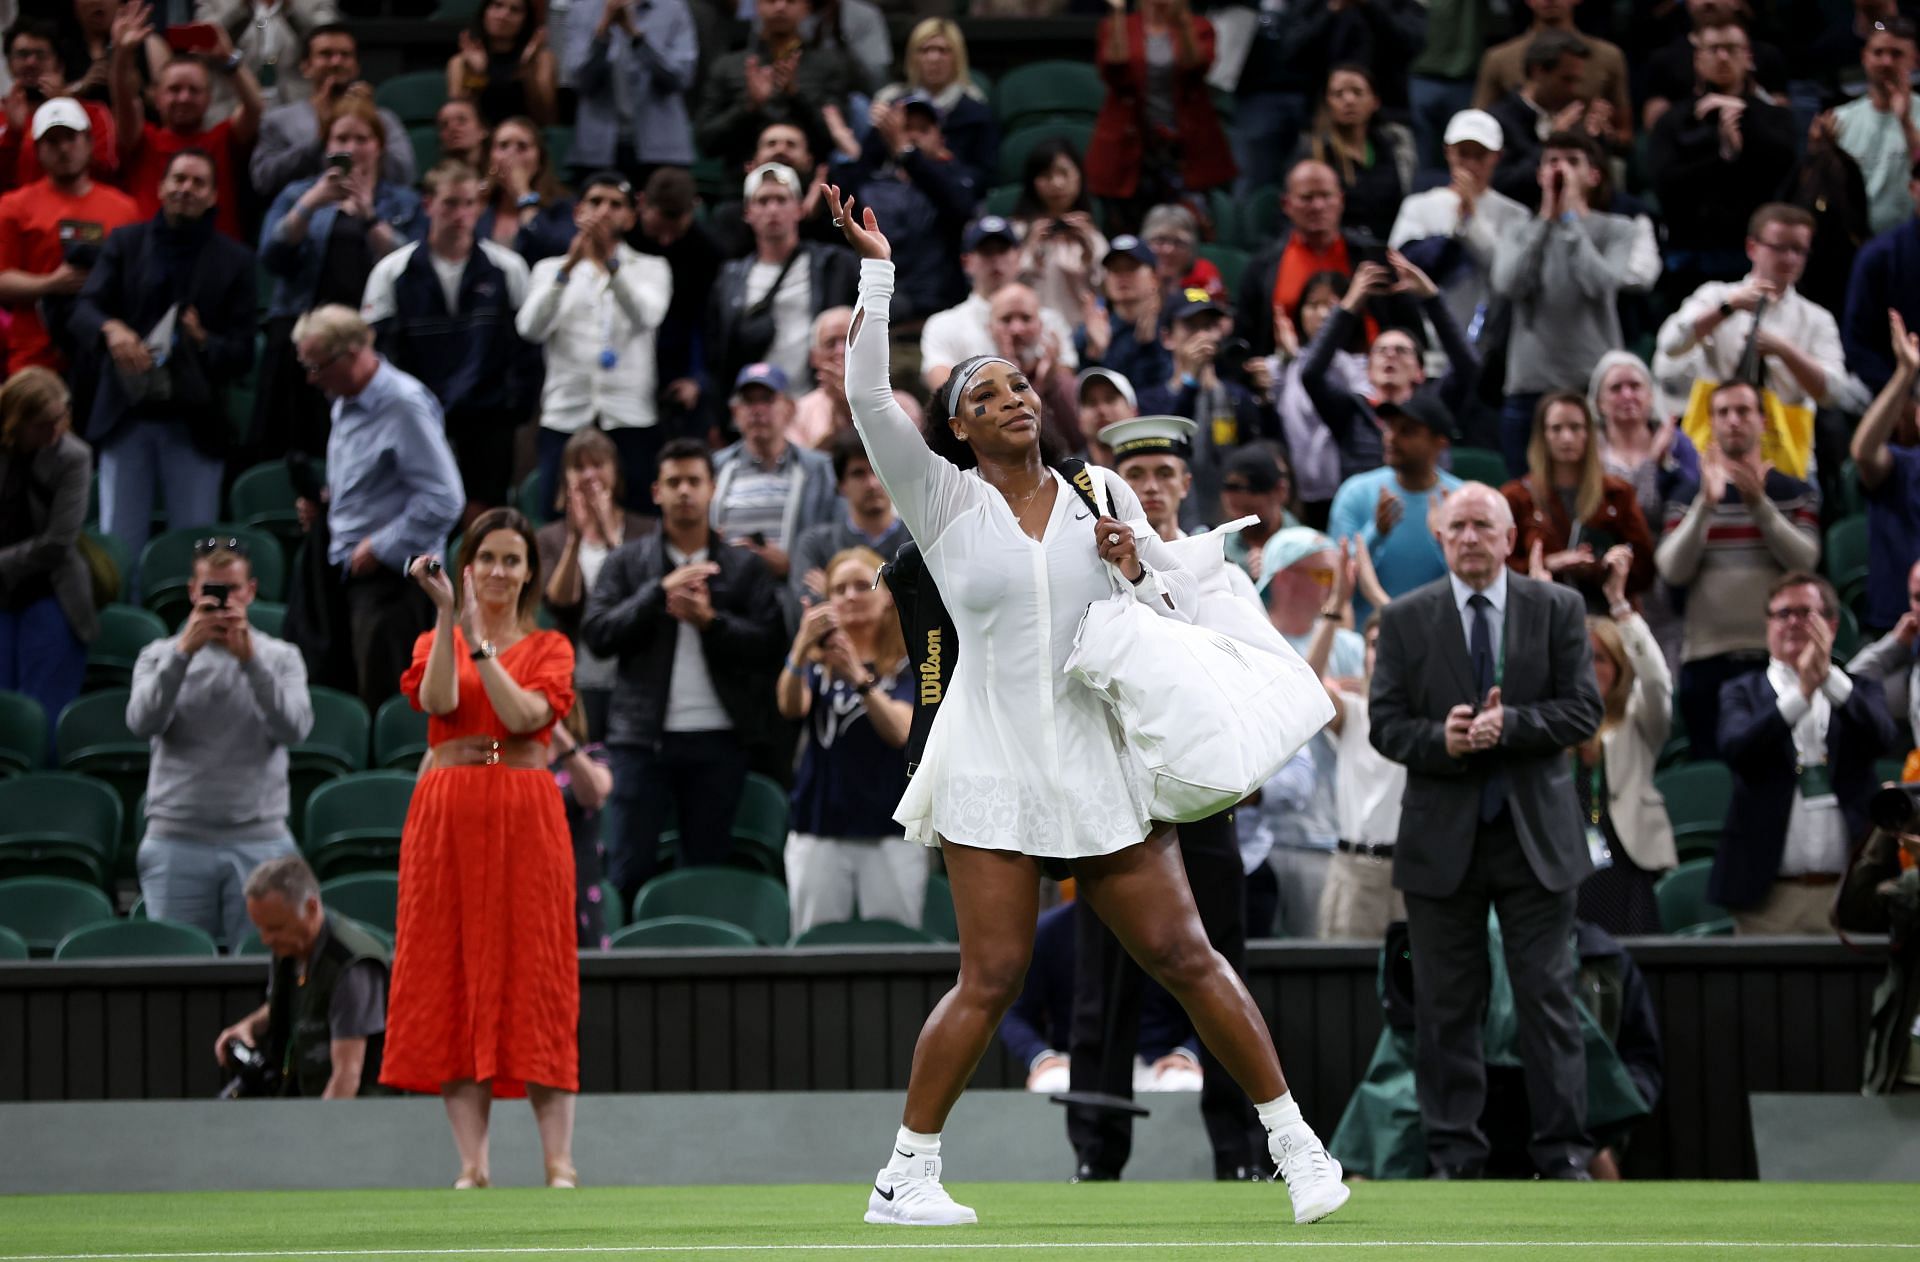 Serena Williams after her last match at Wimbledon